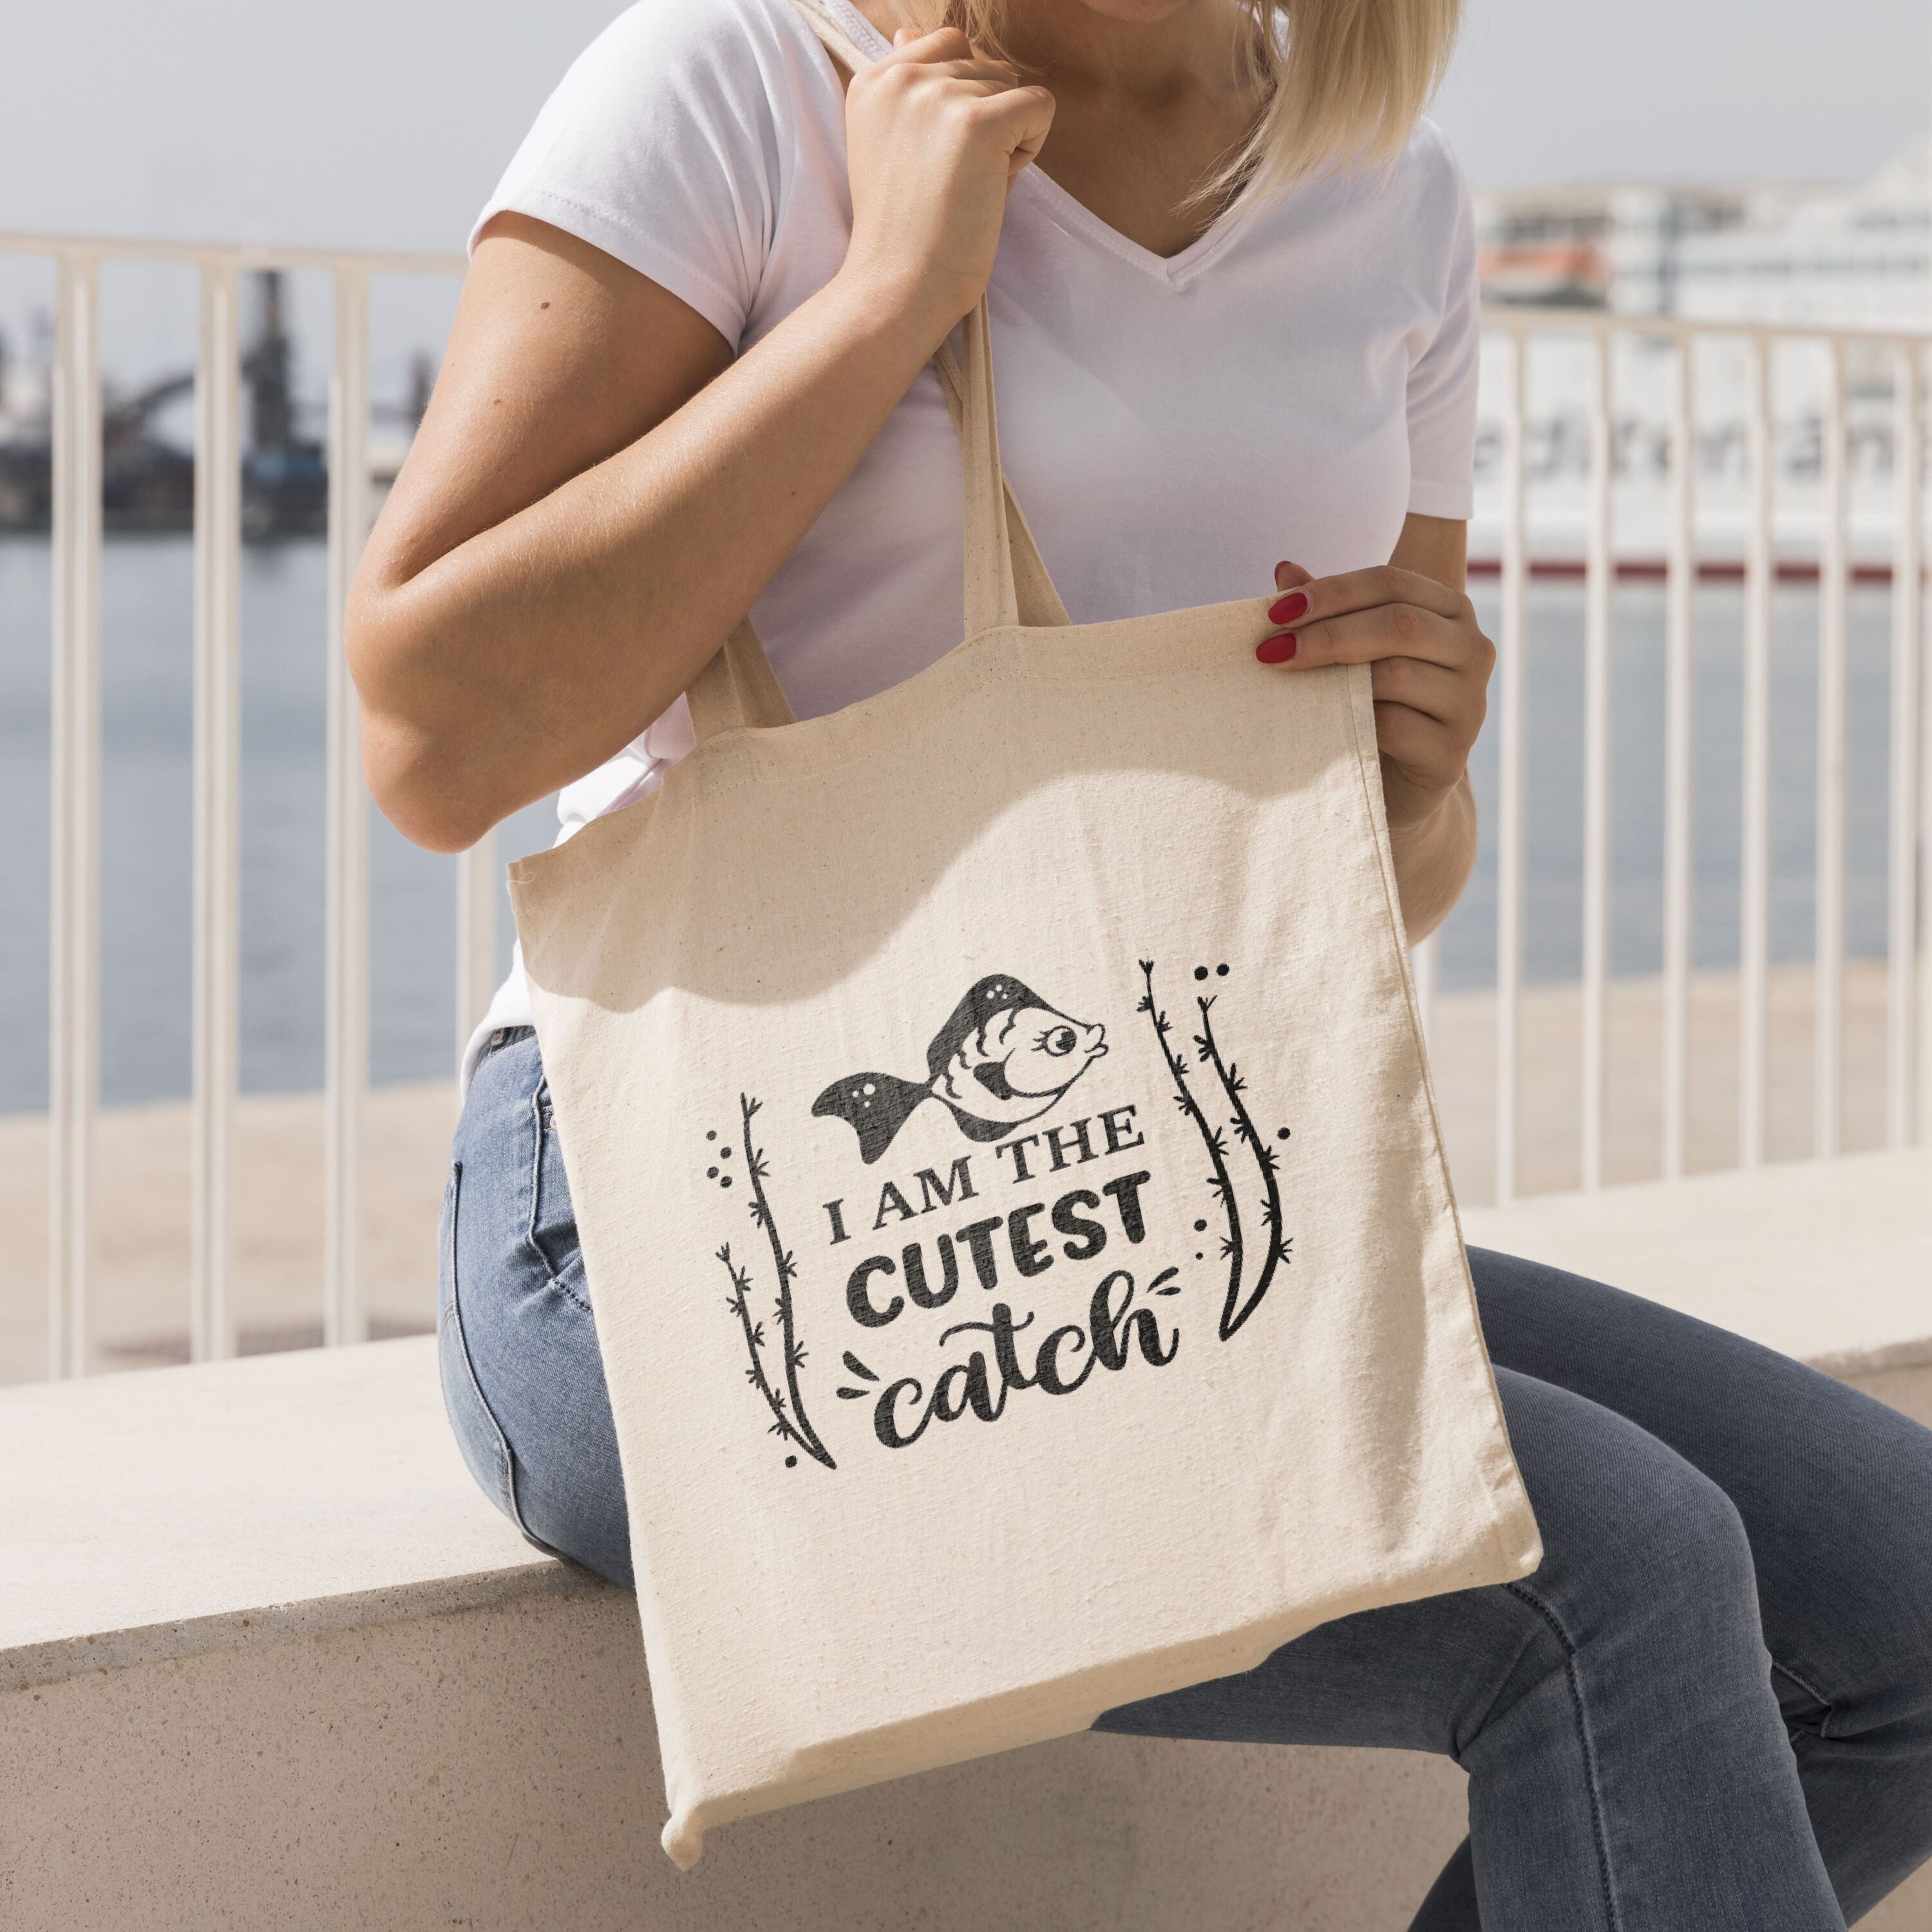 Shopper bag with fishing bundle svg elements.